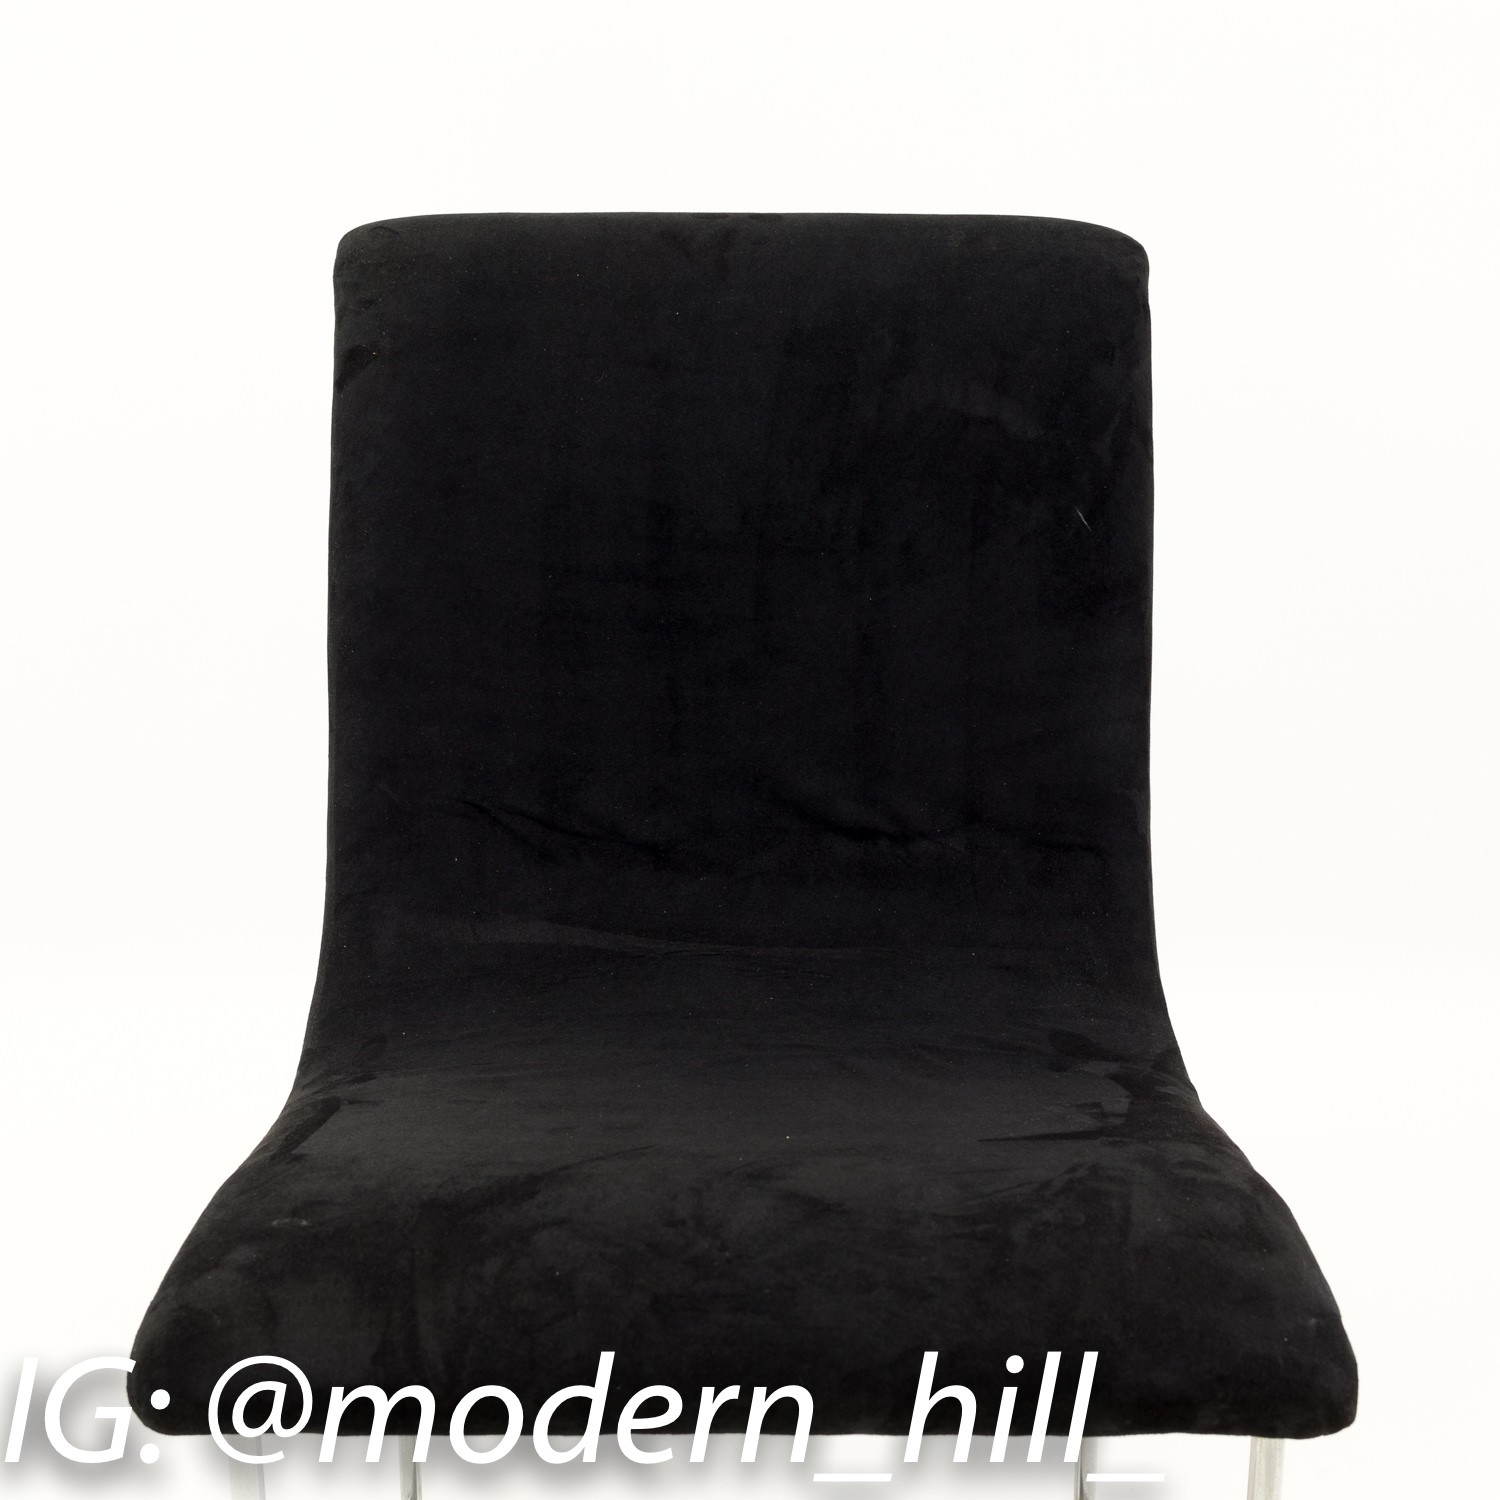 Milo Baughman for Directional Mid Century Black Velvet Chrome Base Lounge Chairs